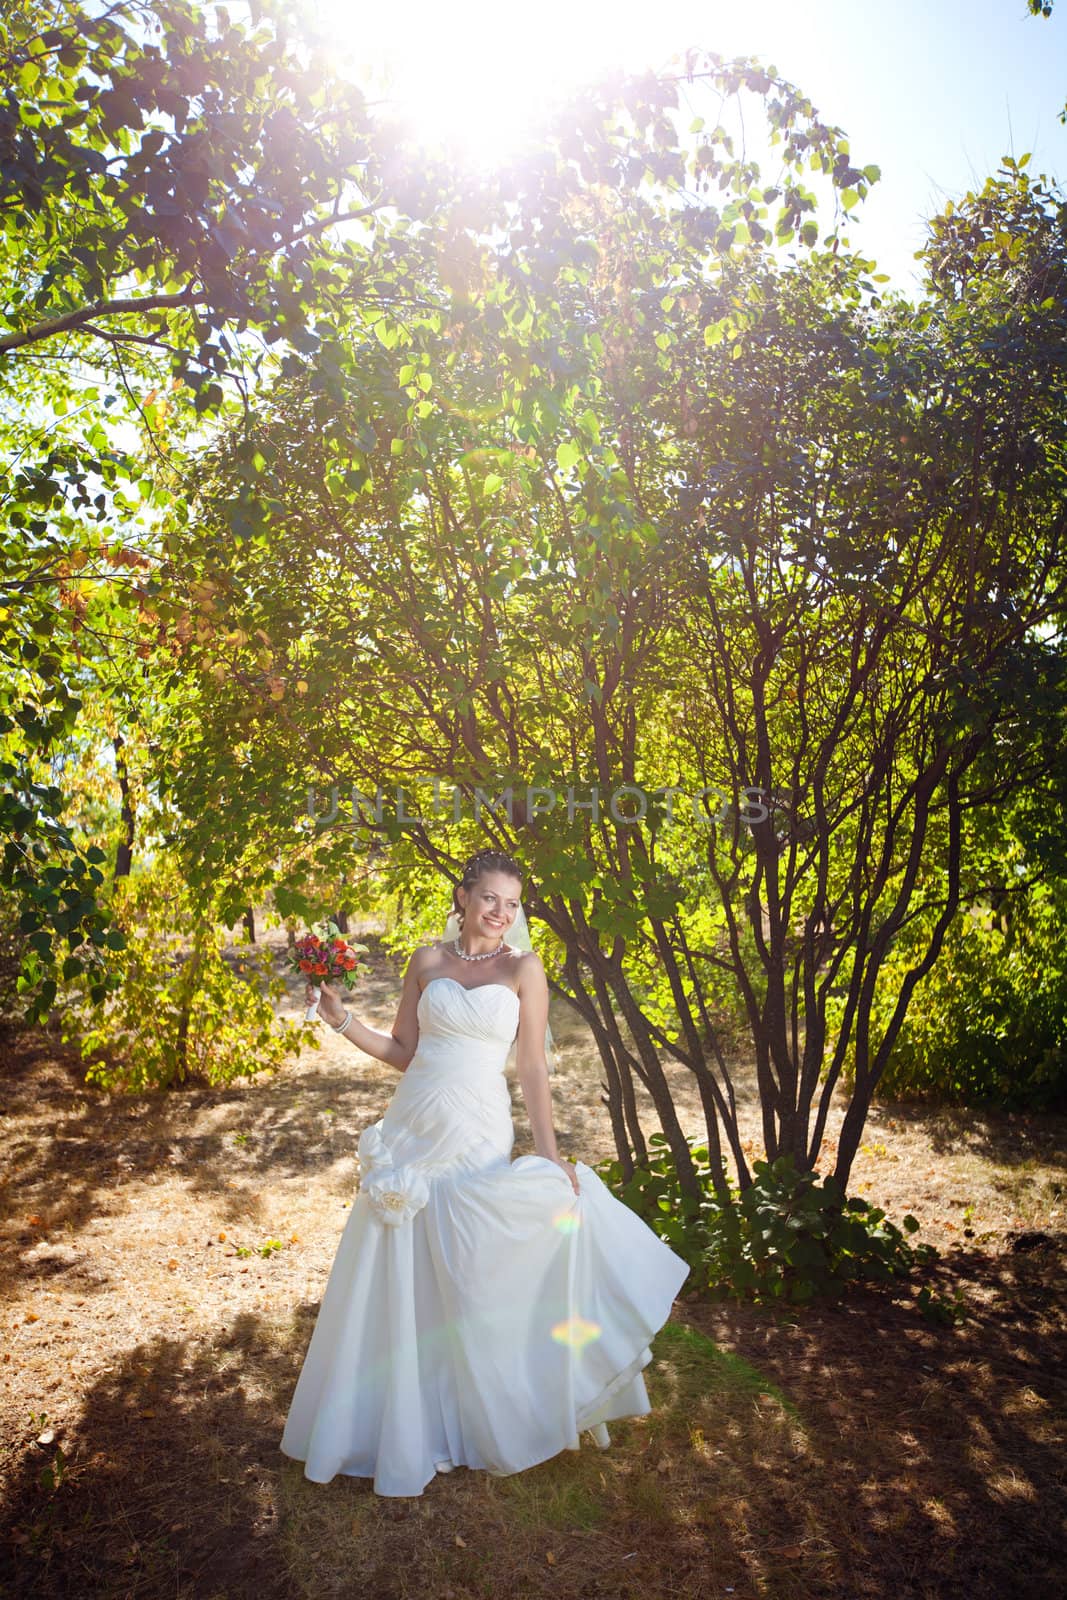  bride dancing in the sunlight outdoors